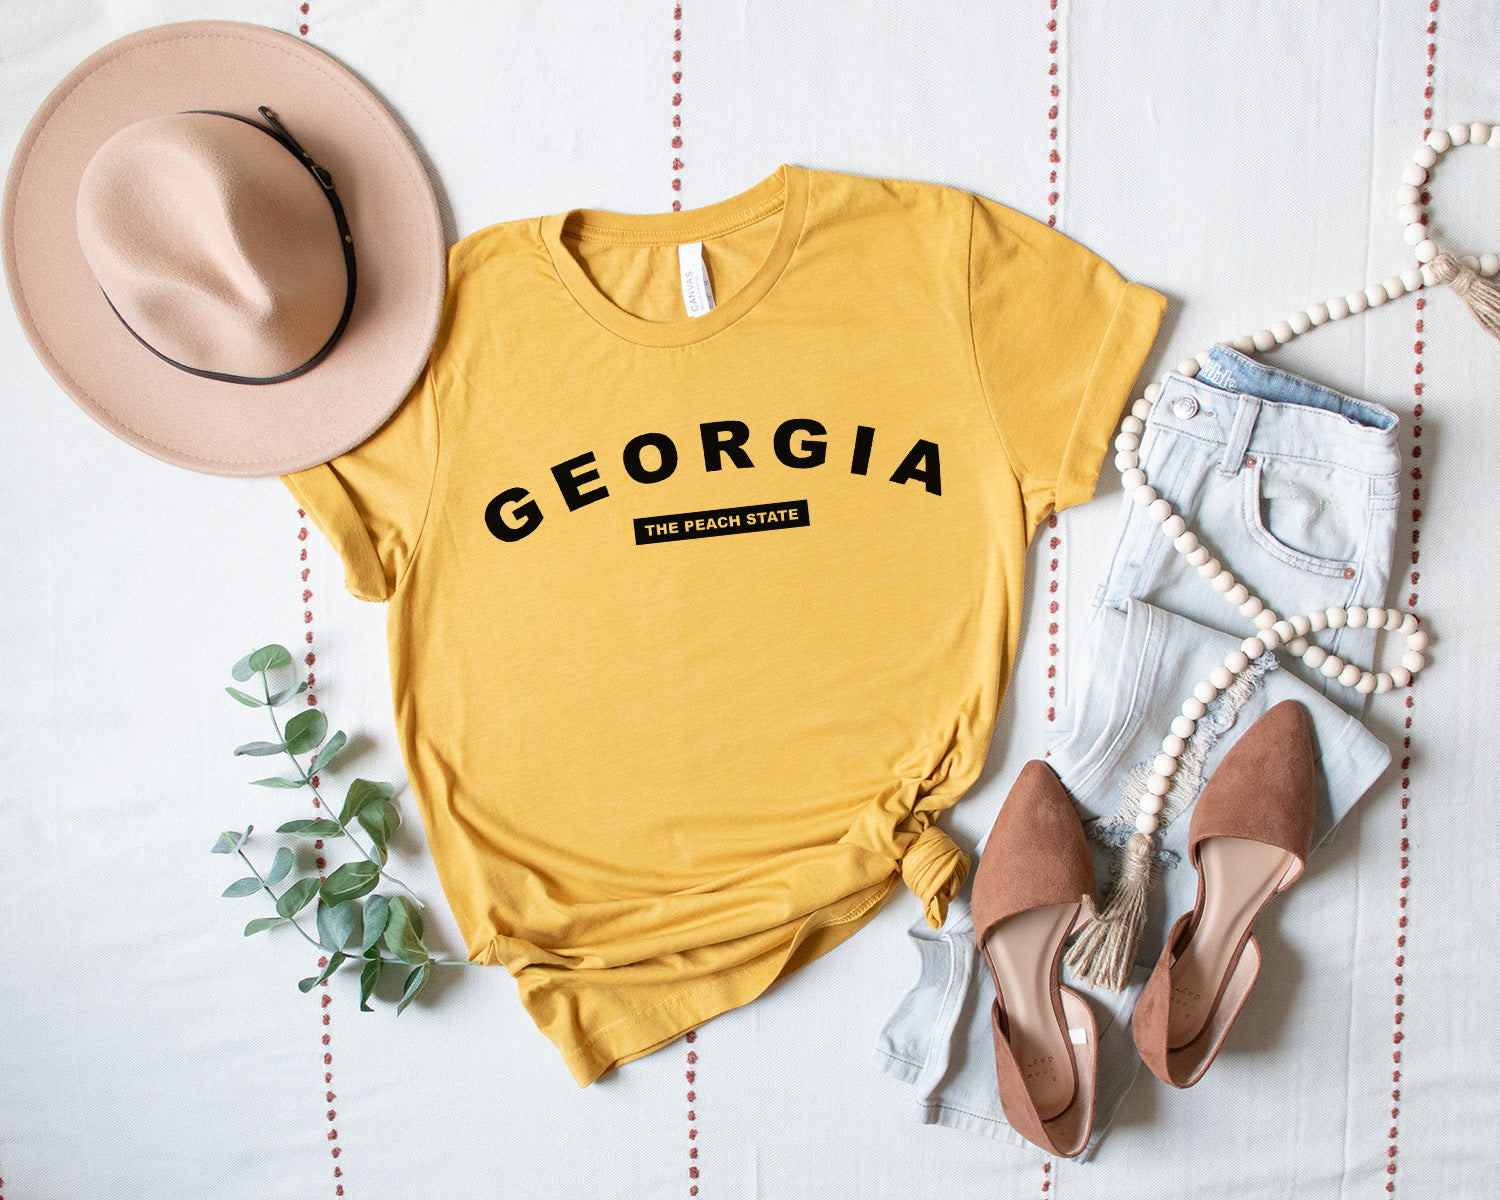 Georgia The Peach State T-shirt - United States Name & Slogan Minimal Design Printed Tee Shirt